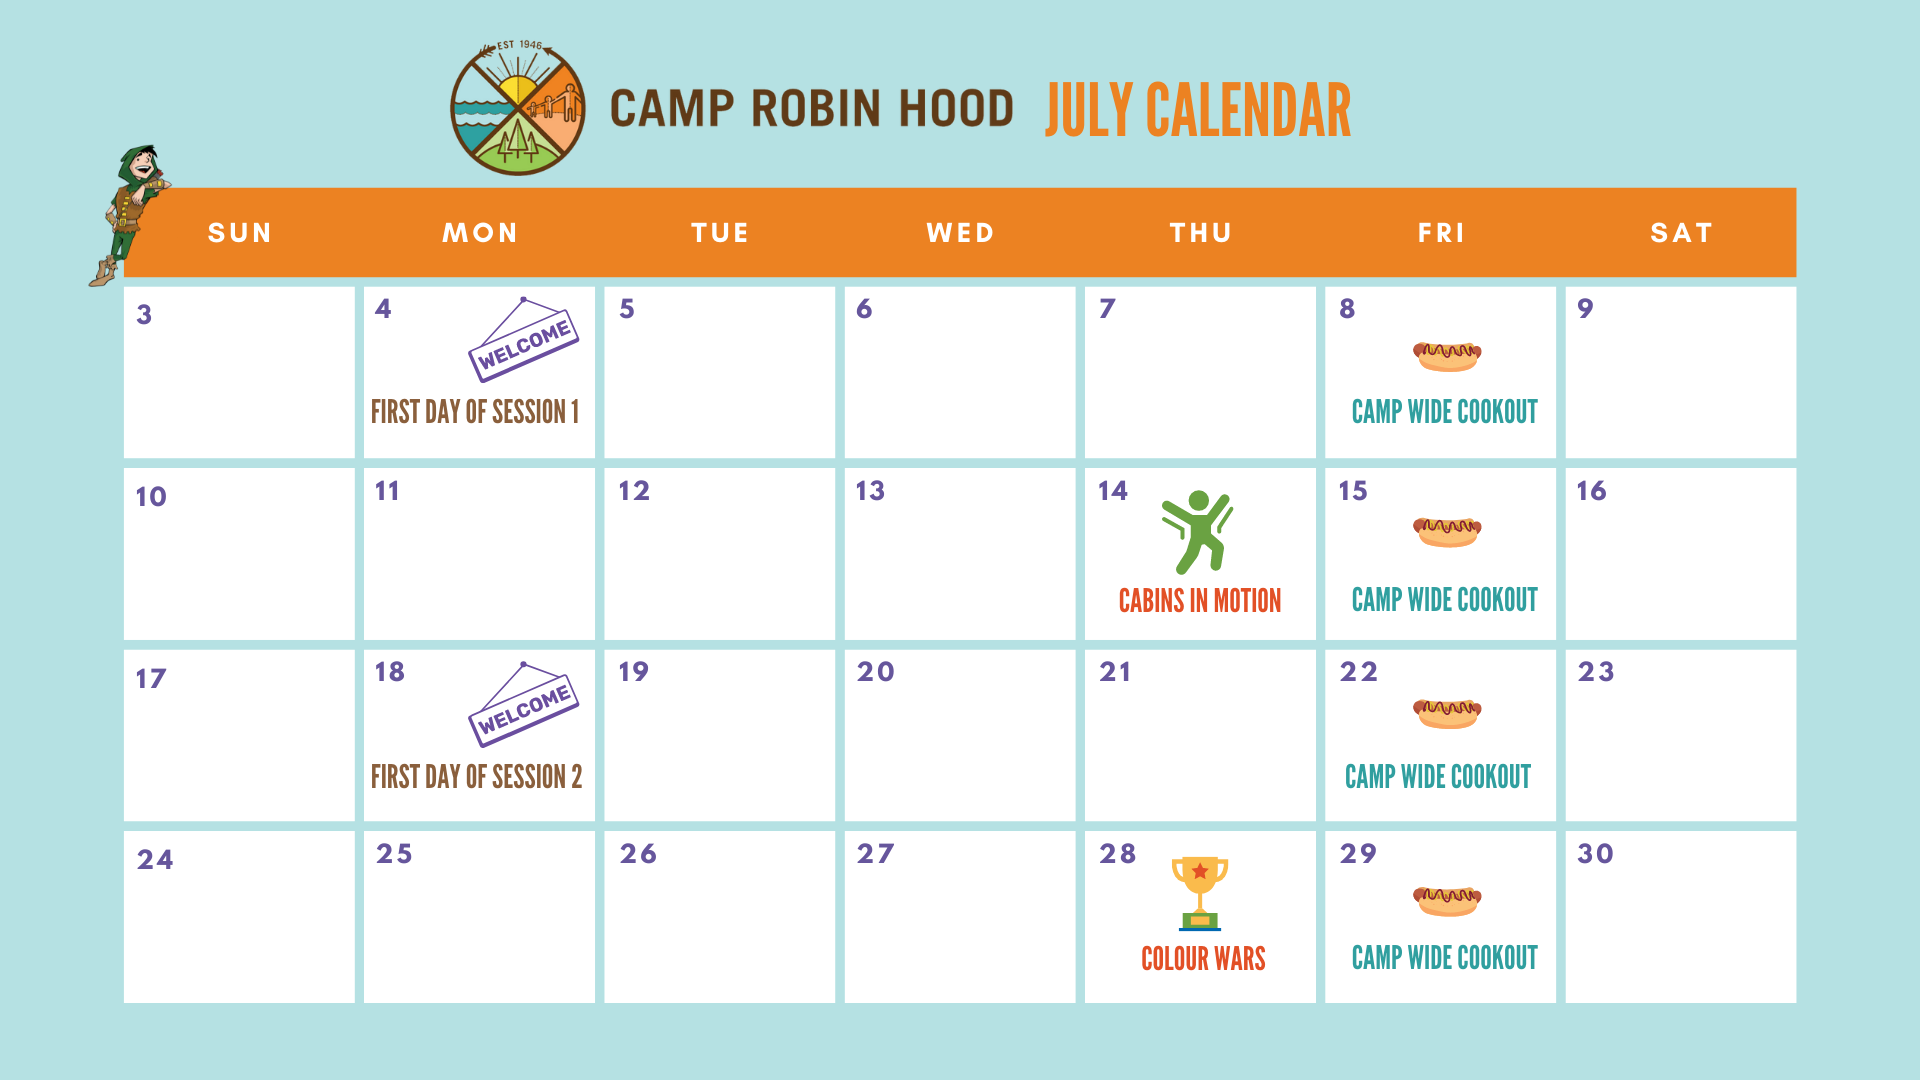 July Calendar Camp Robin Hood Summer Day Camp In the GTA